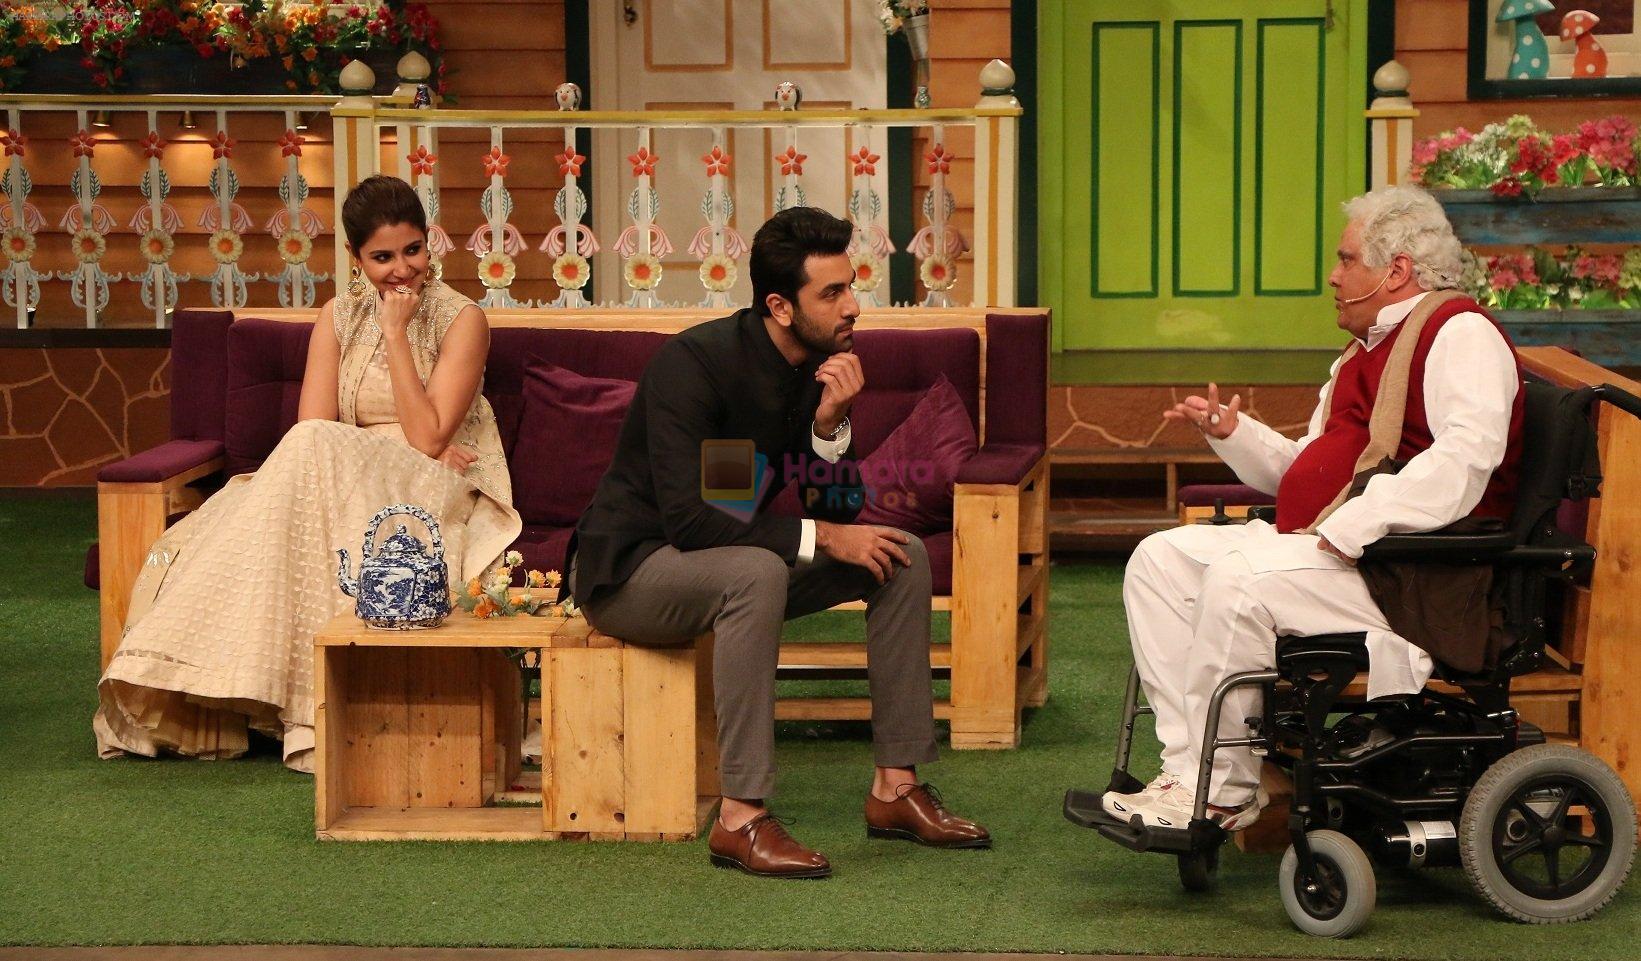 Ranbir Kapoor, Anushka Sharma at the promotion of Ae Dil Hai Mushkil on the sets of Kapil Sharma Show on 19th Oct 2016